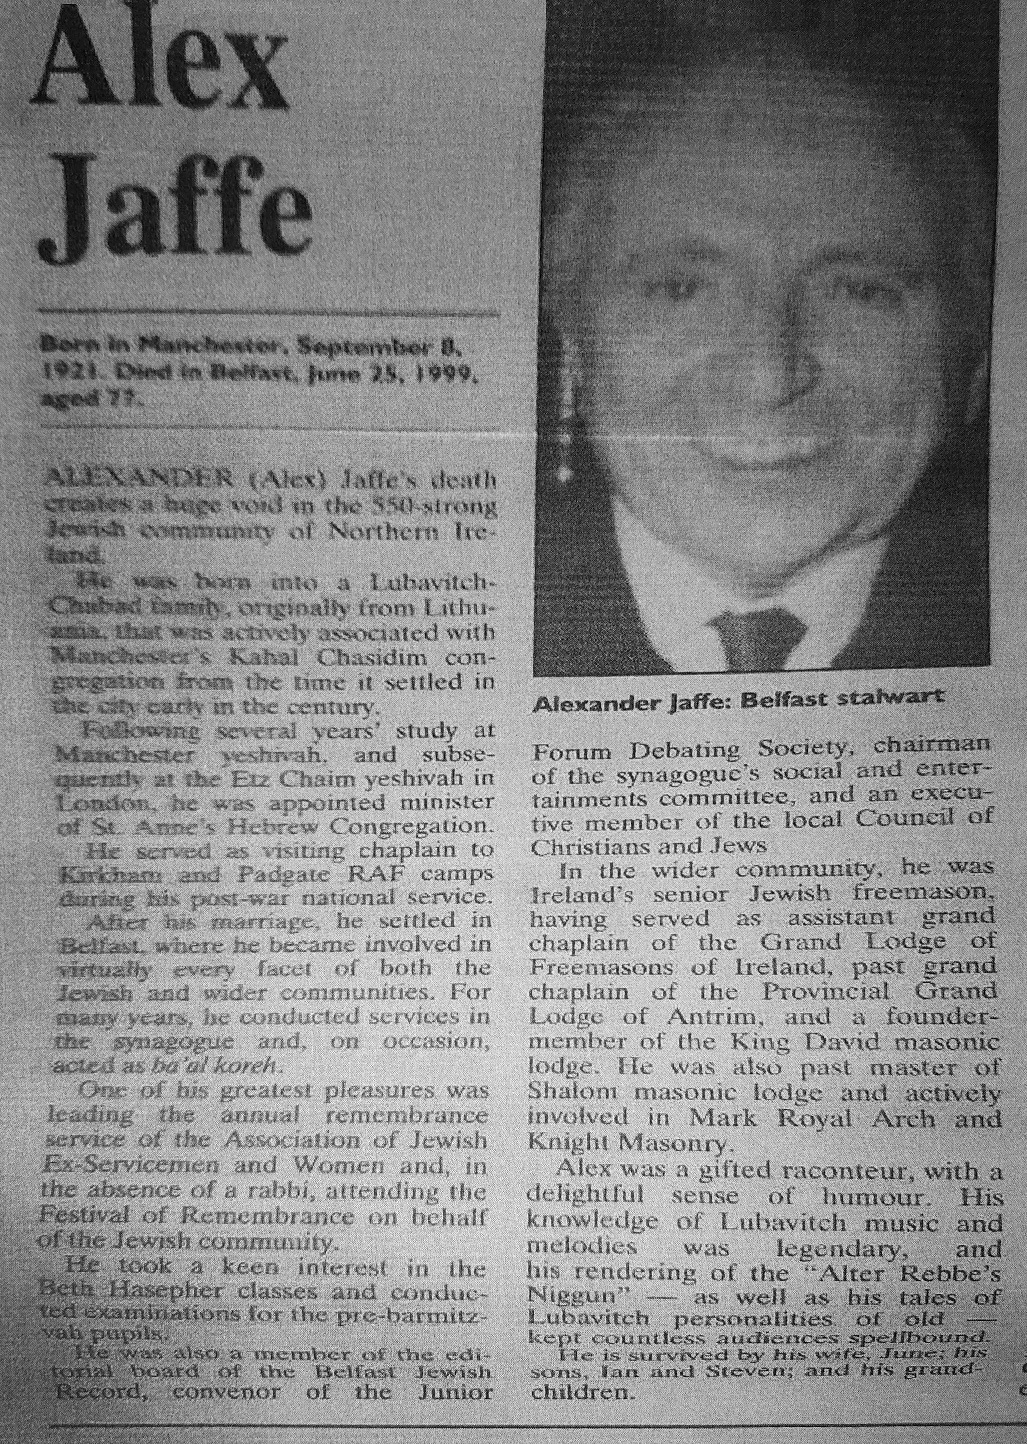 Rev. Alex Jaffe obituary